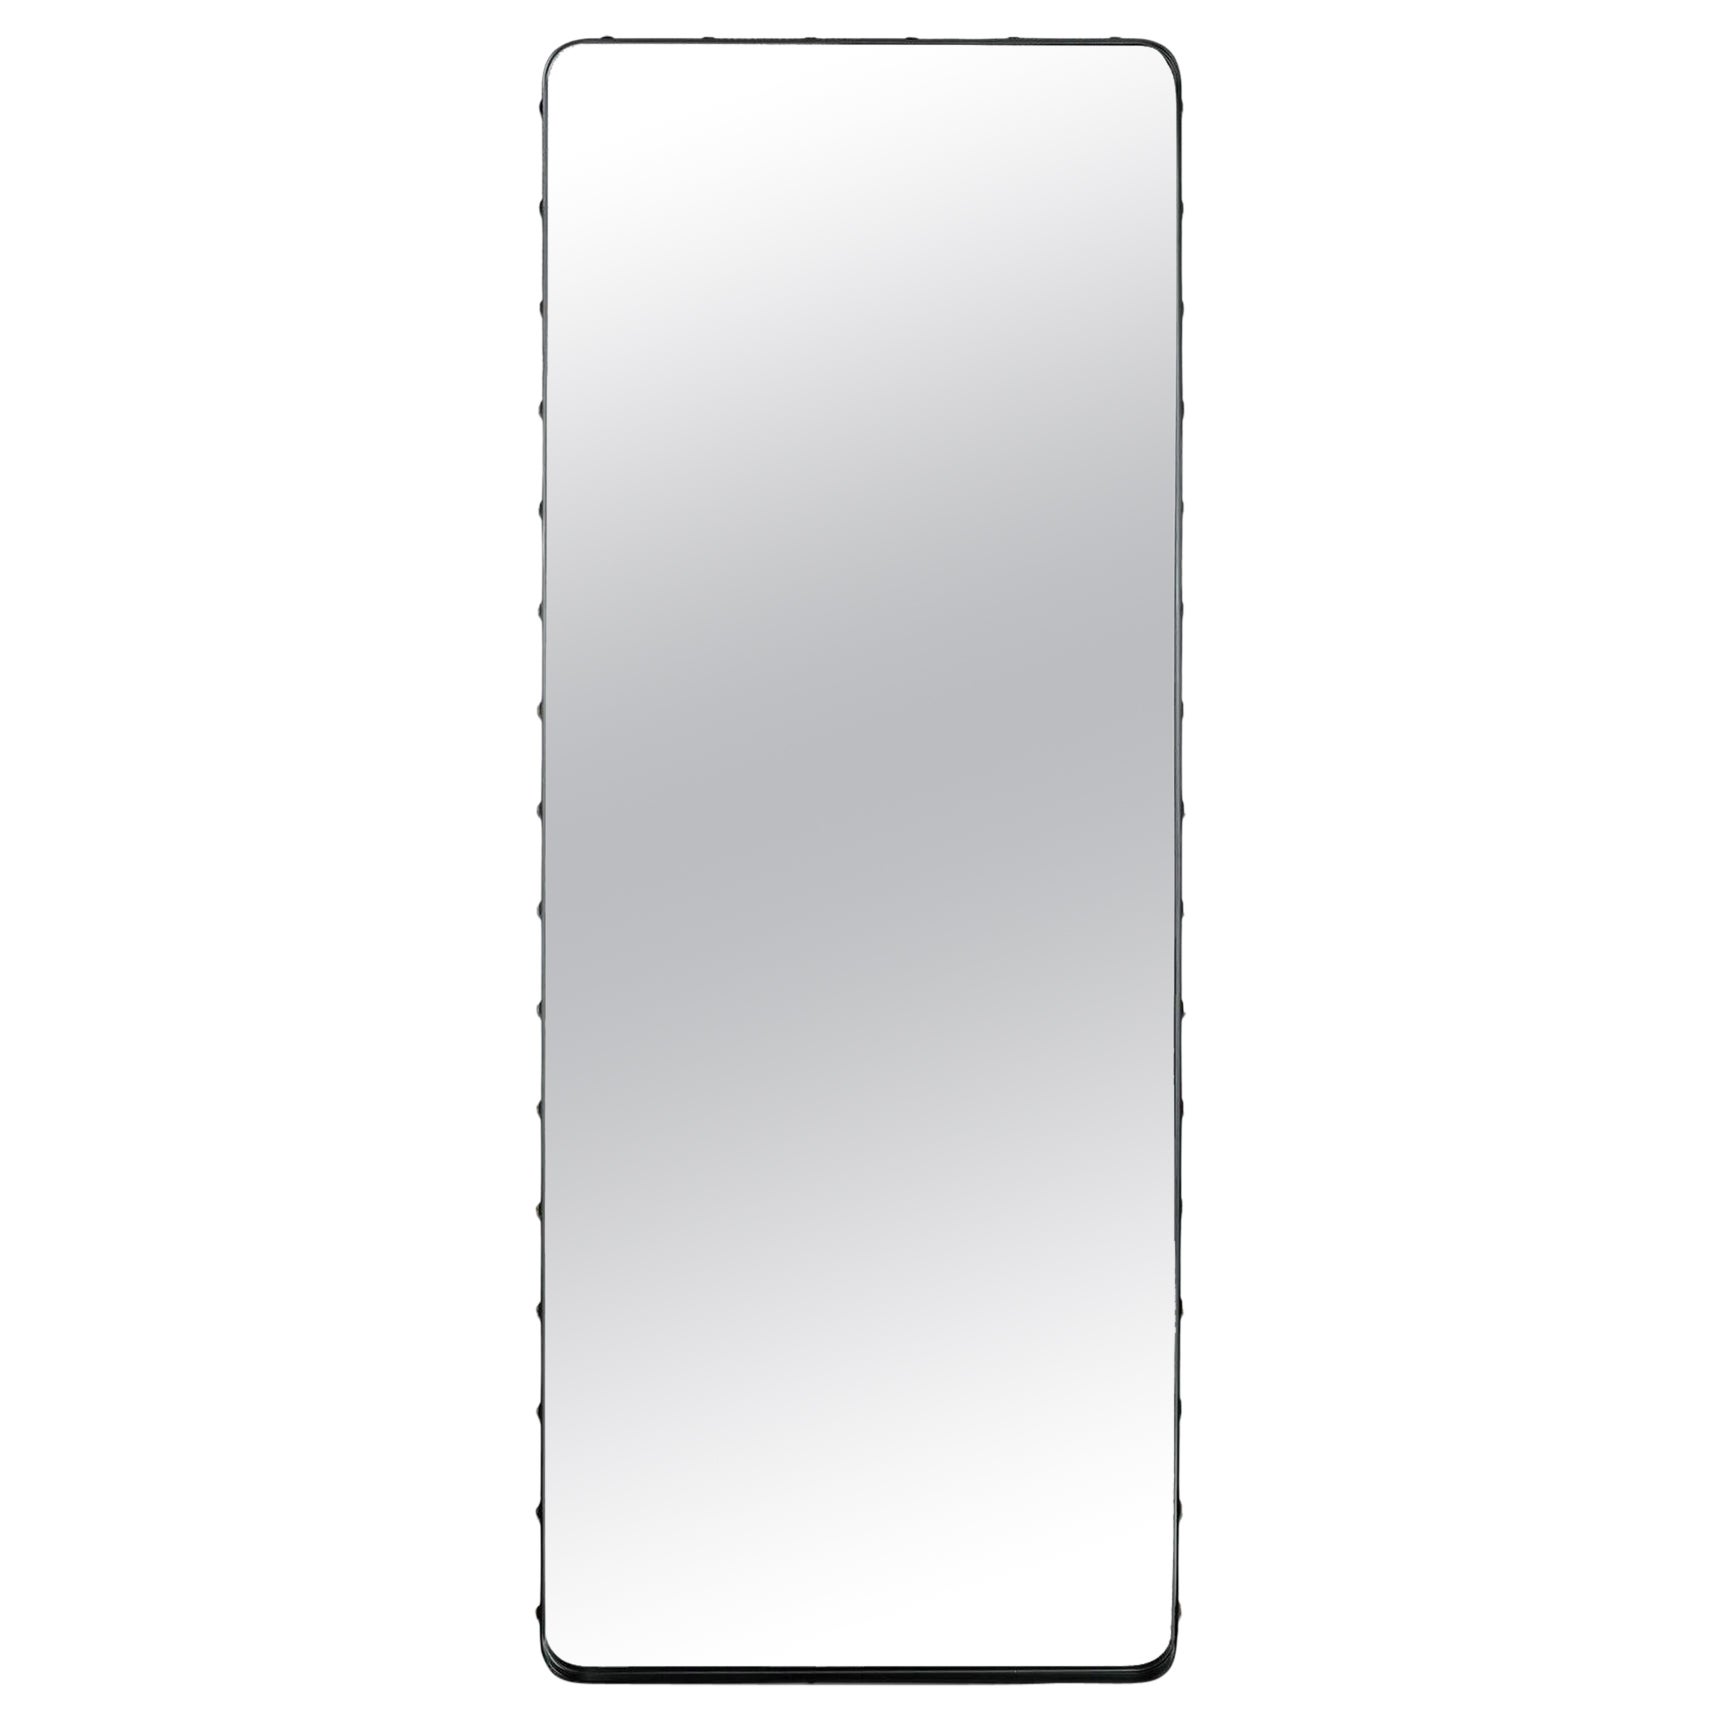 Adnet Rectangular Mirror by Gubi, Large For Sale